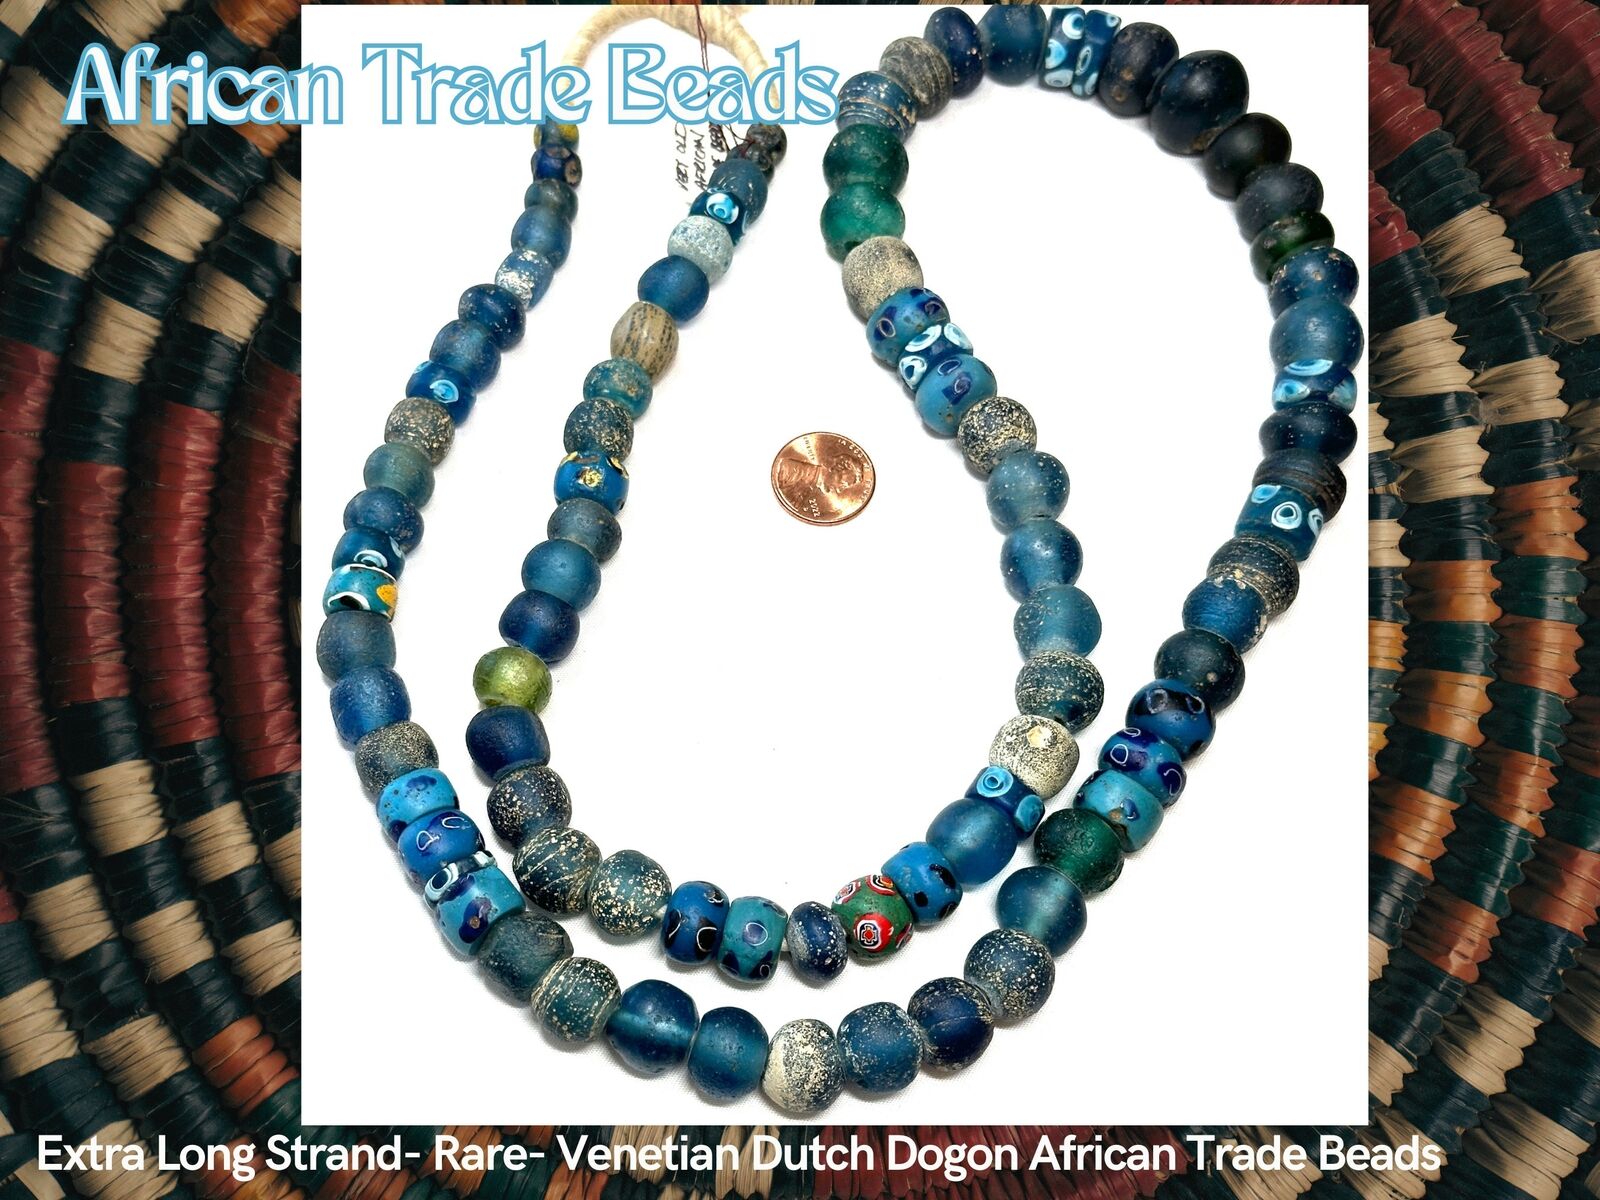 Extra Long Strand- Rare- Ancient Venetian Dutch Dogon African Trade Beads